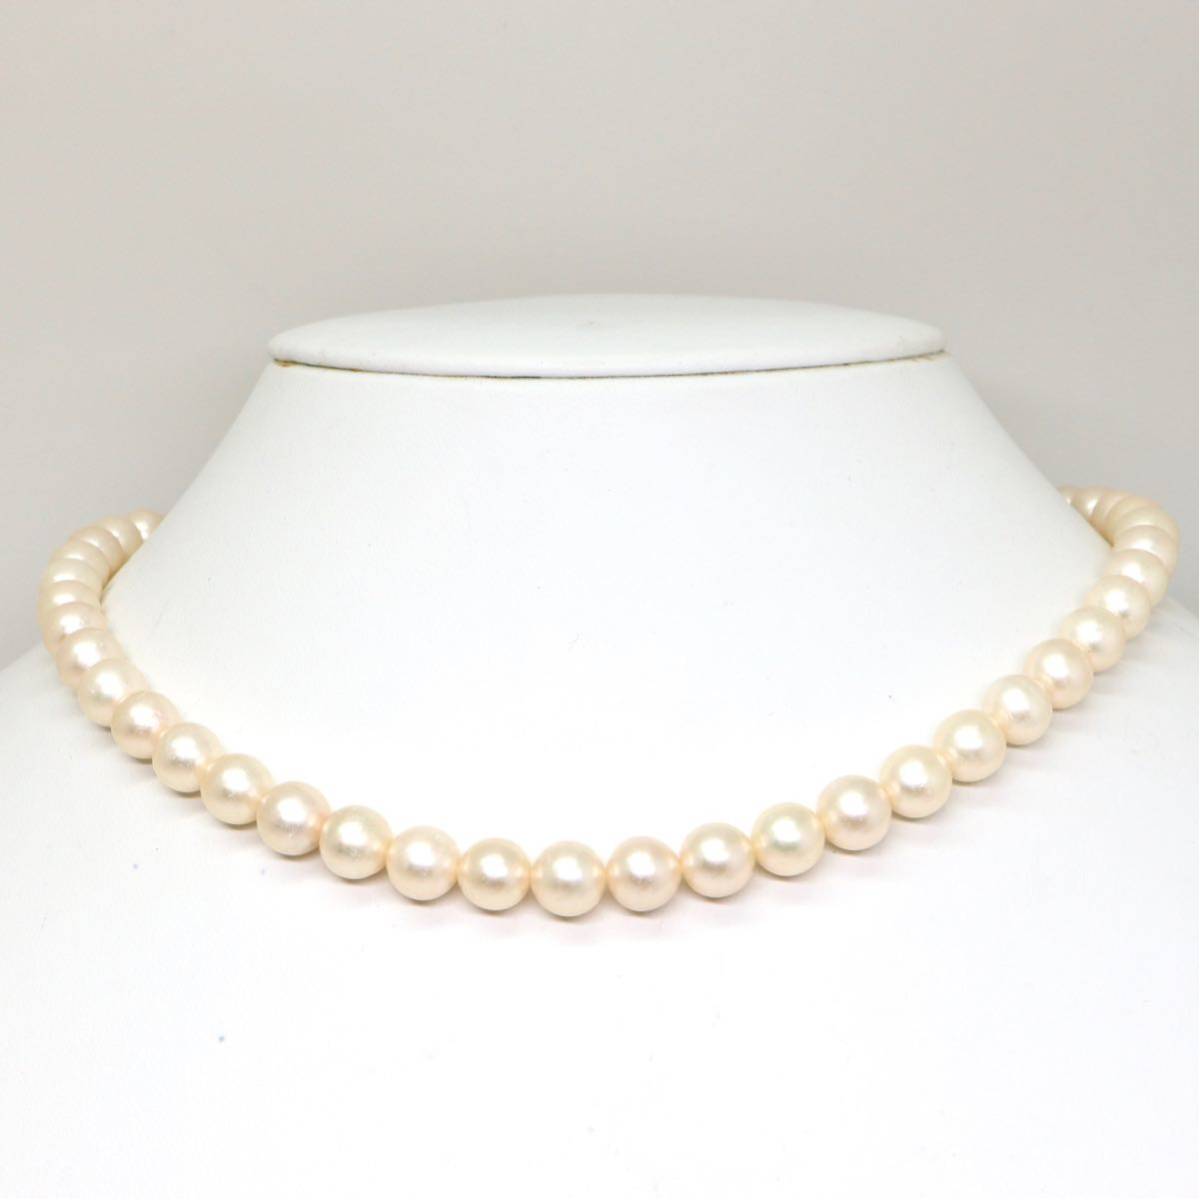 ◆K14 アコヤ本真珠ネックレス◆N 33.6g 40.0cm 7.5mm珠 真珠 pearl necklace ジュエリー jewelry EA5/EA5_画像2